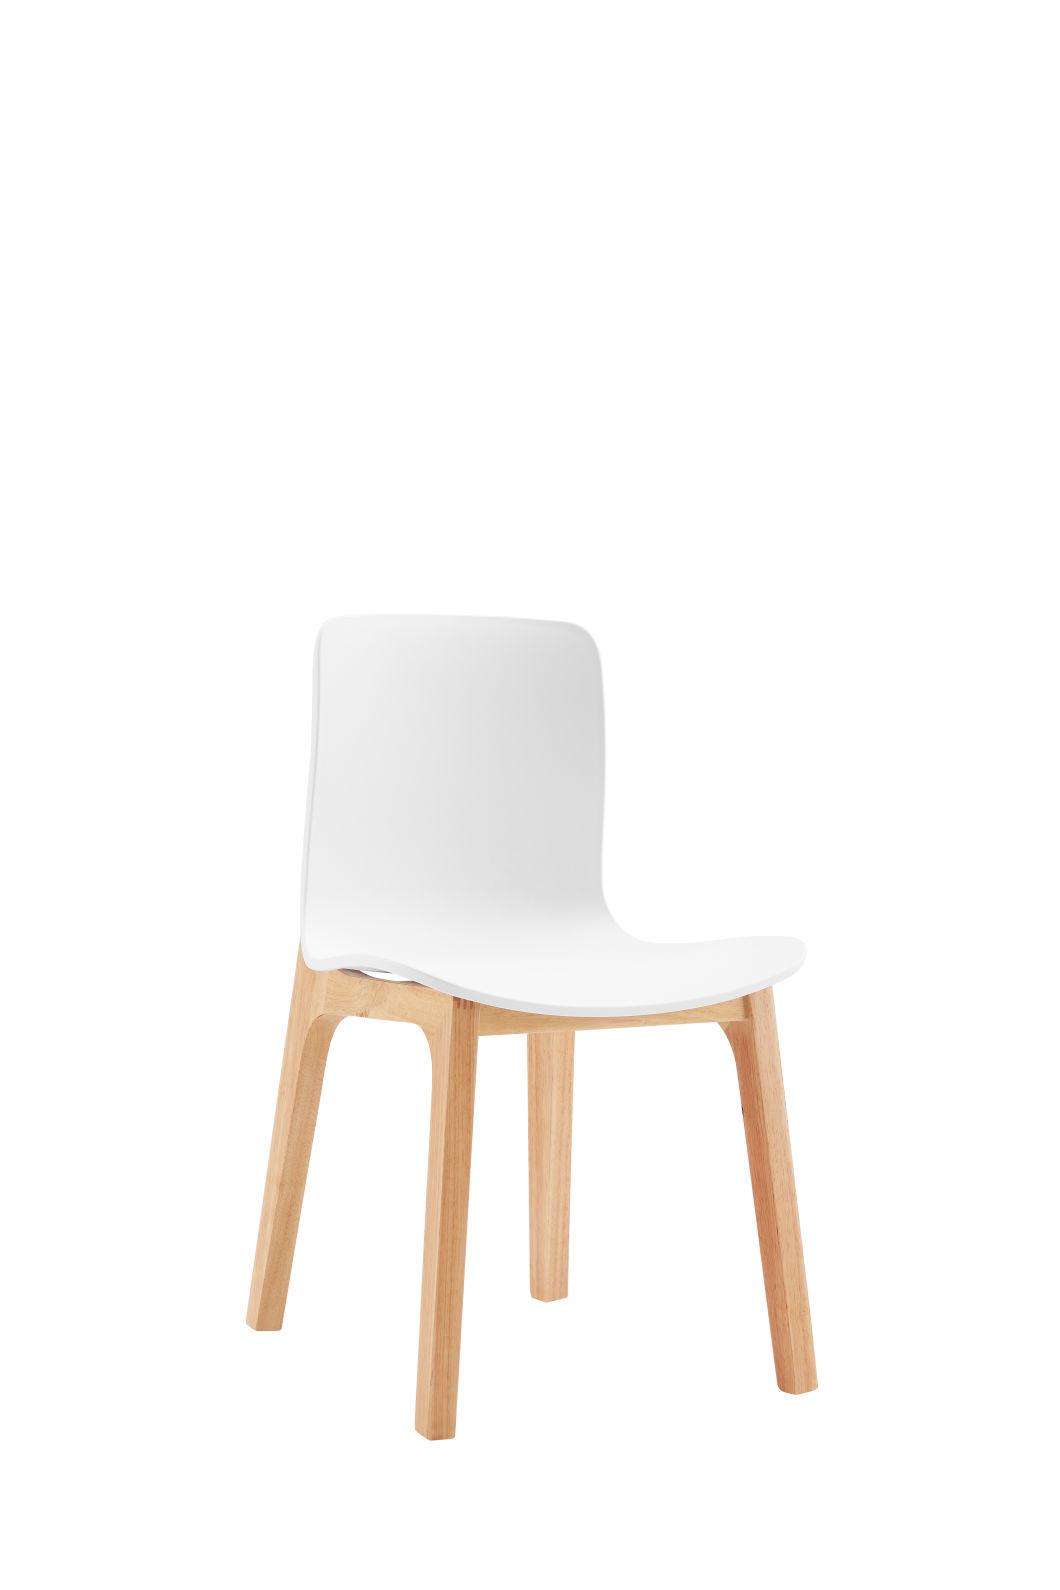 Modern Dinner Restaurant Cafe Hotel Furniture Wooden Legs PP Plastic Dining Chairs